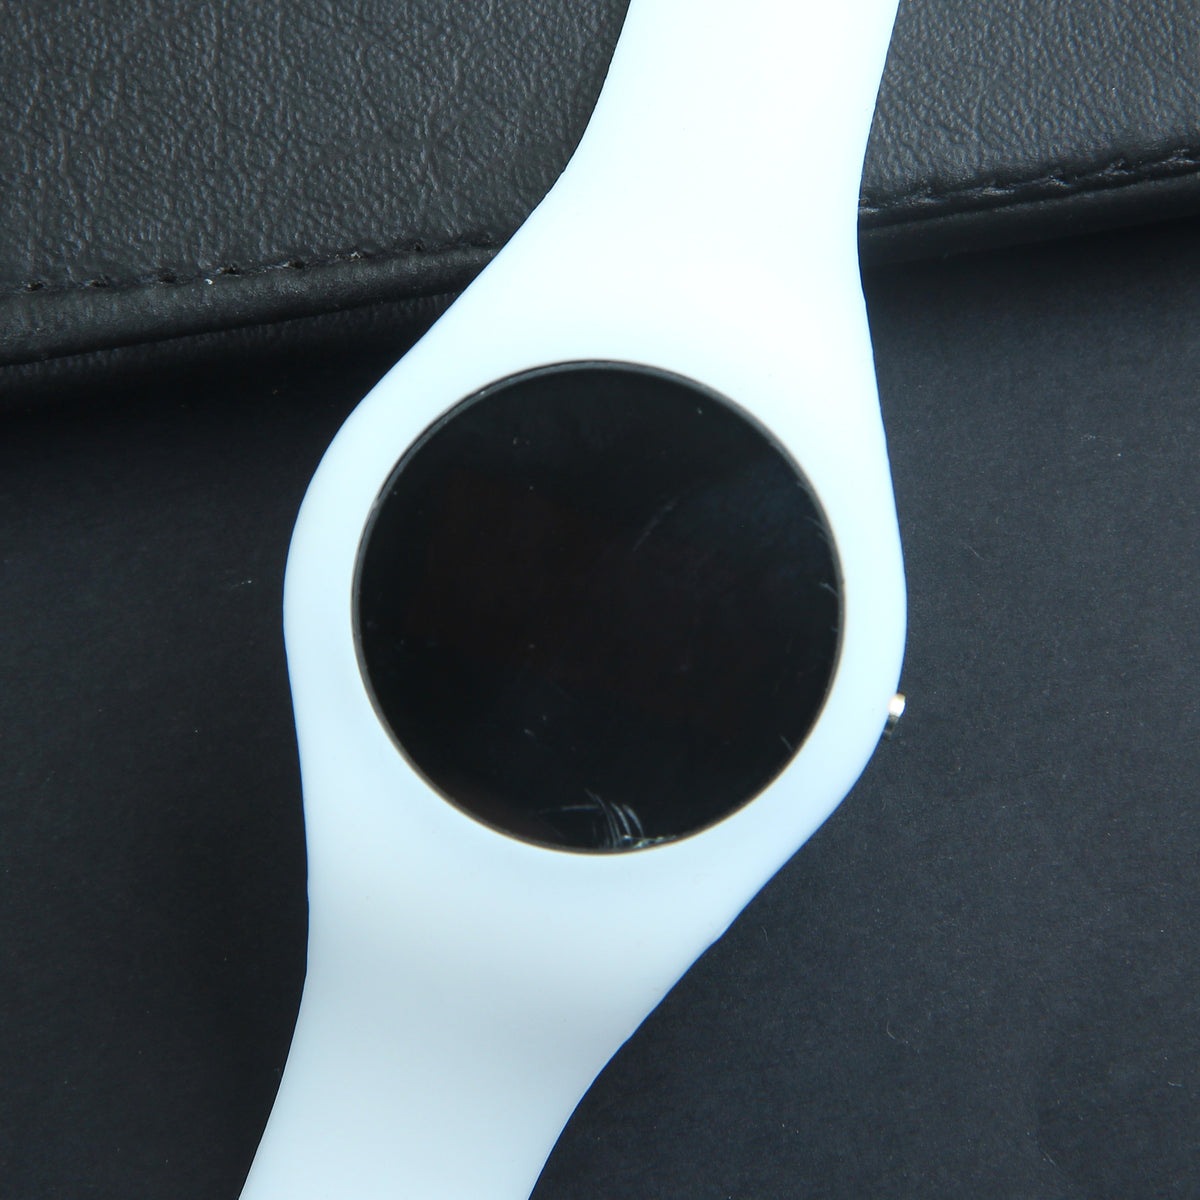 Digital LED Wrist Watch White